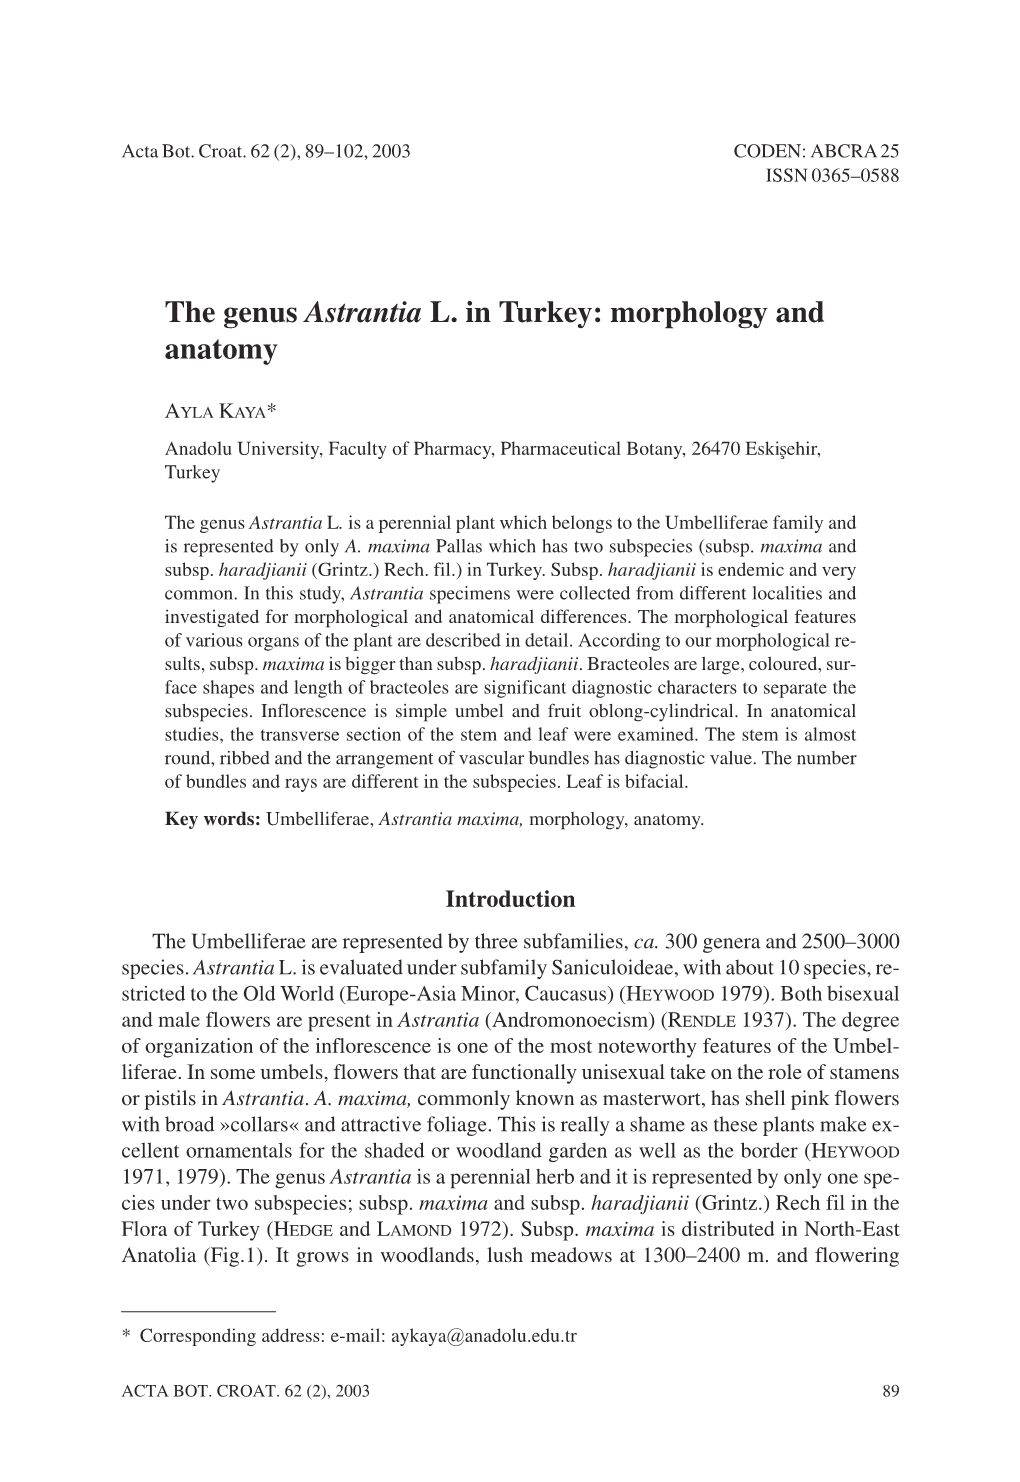 The Genus Astrantia L. in Turkey: Morphology and Anatomy